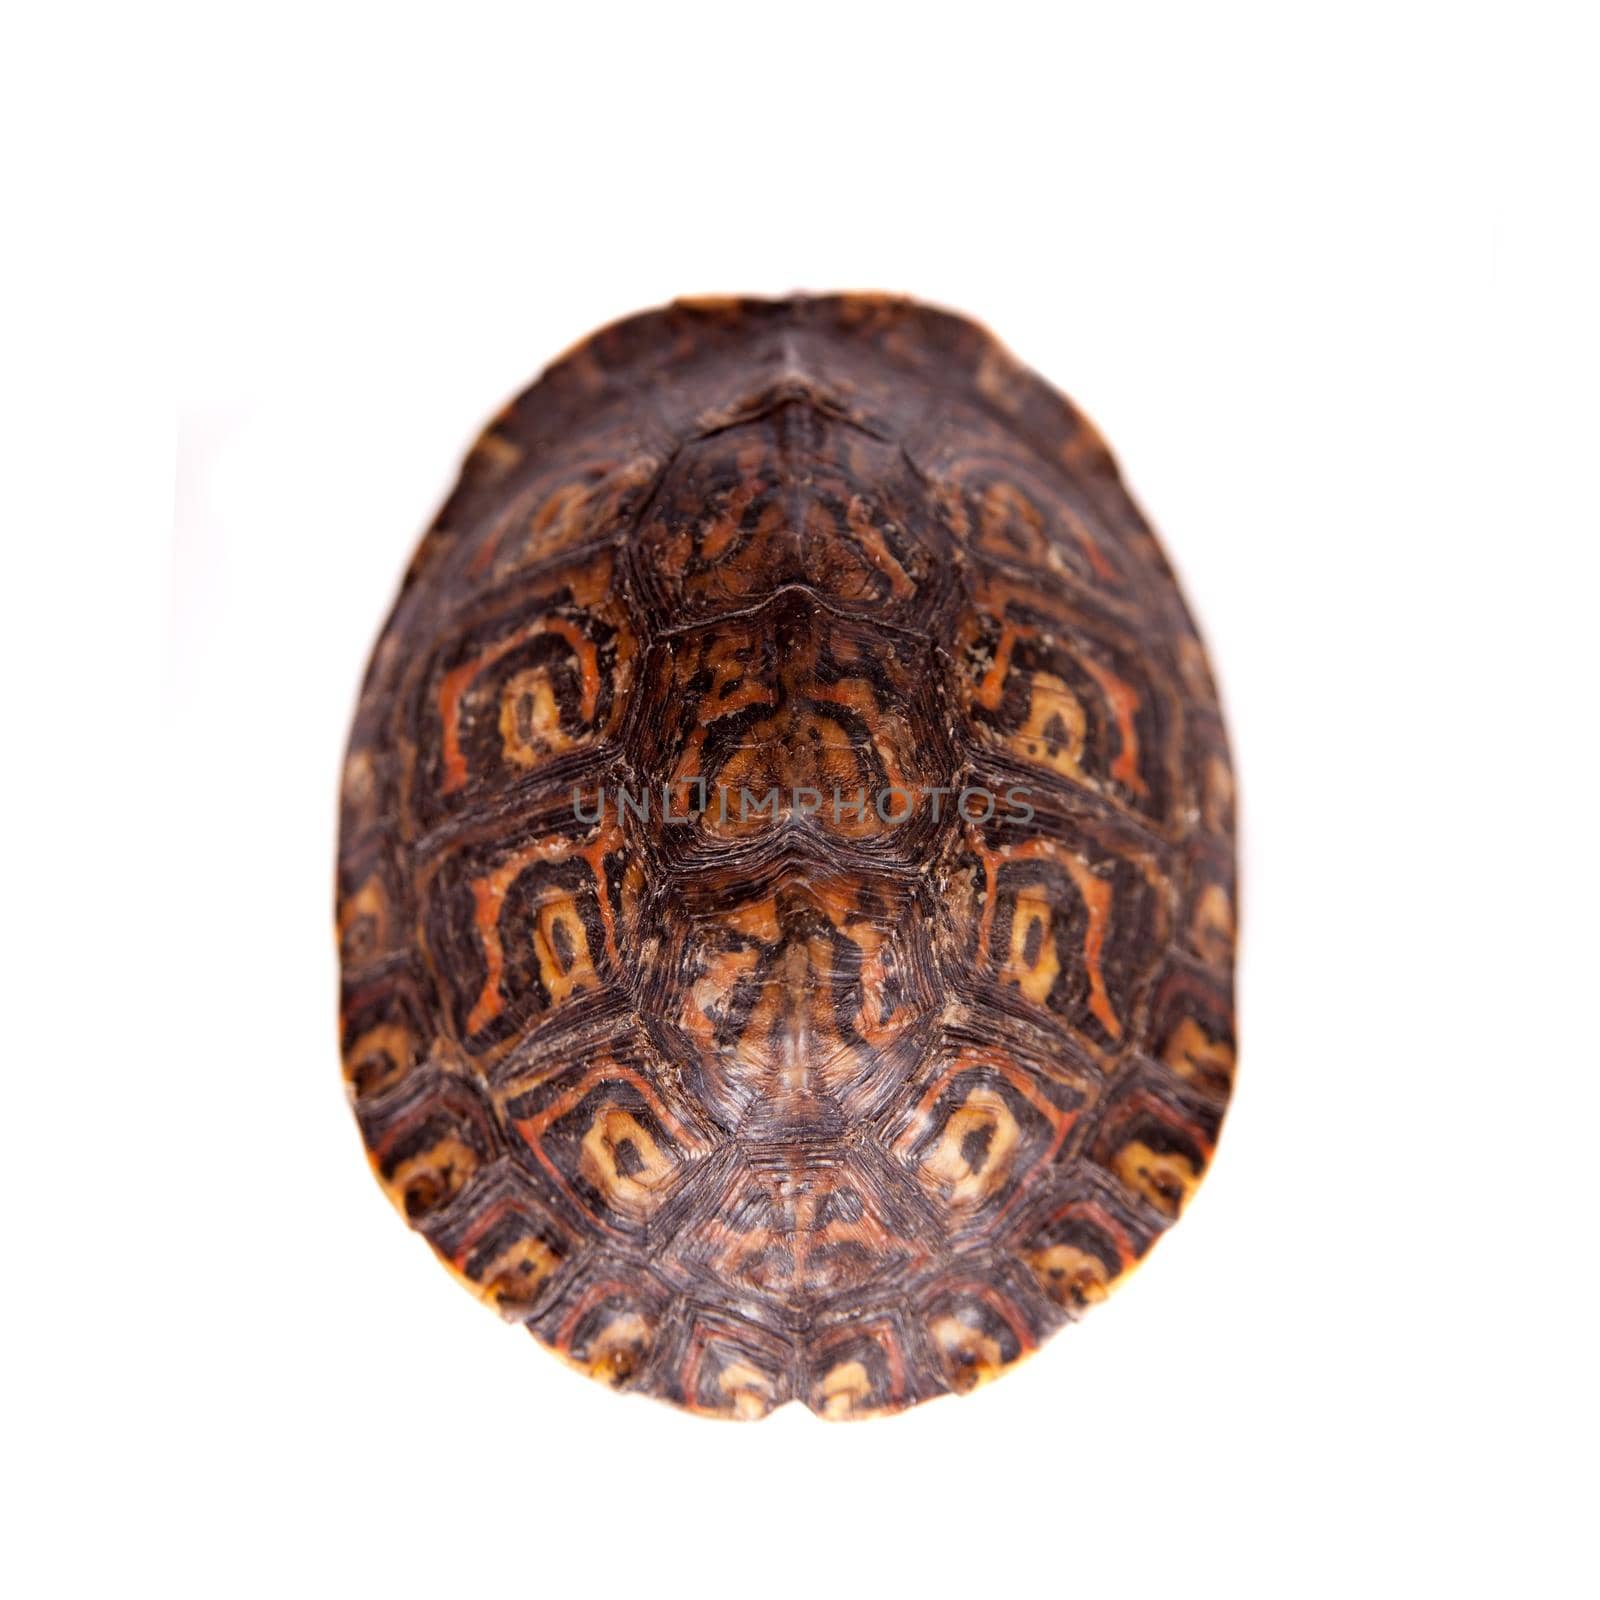 The Painted wood turtle, Rhinoclemmys pulcherrima manni, isolated on white background